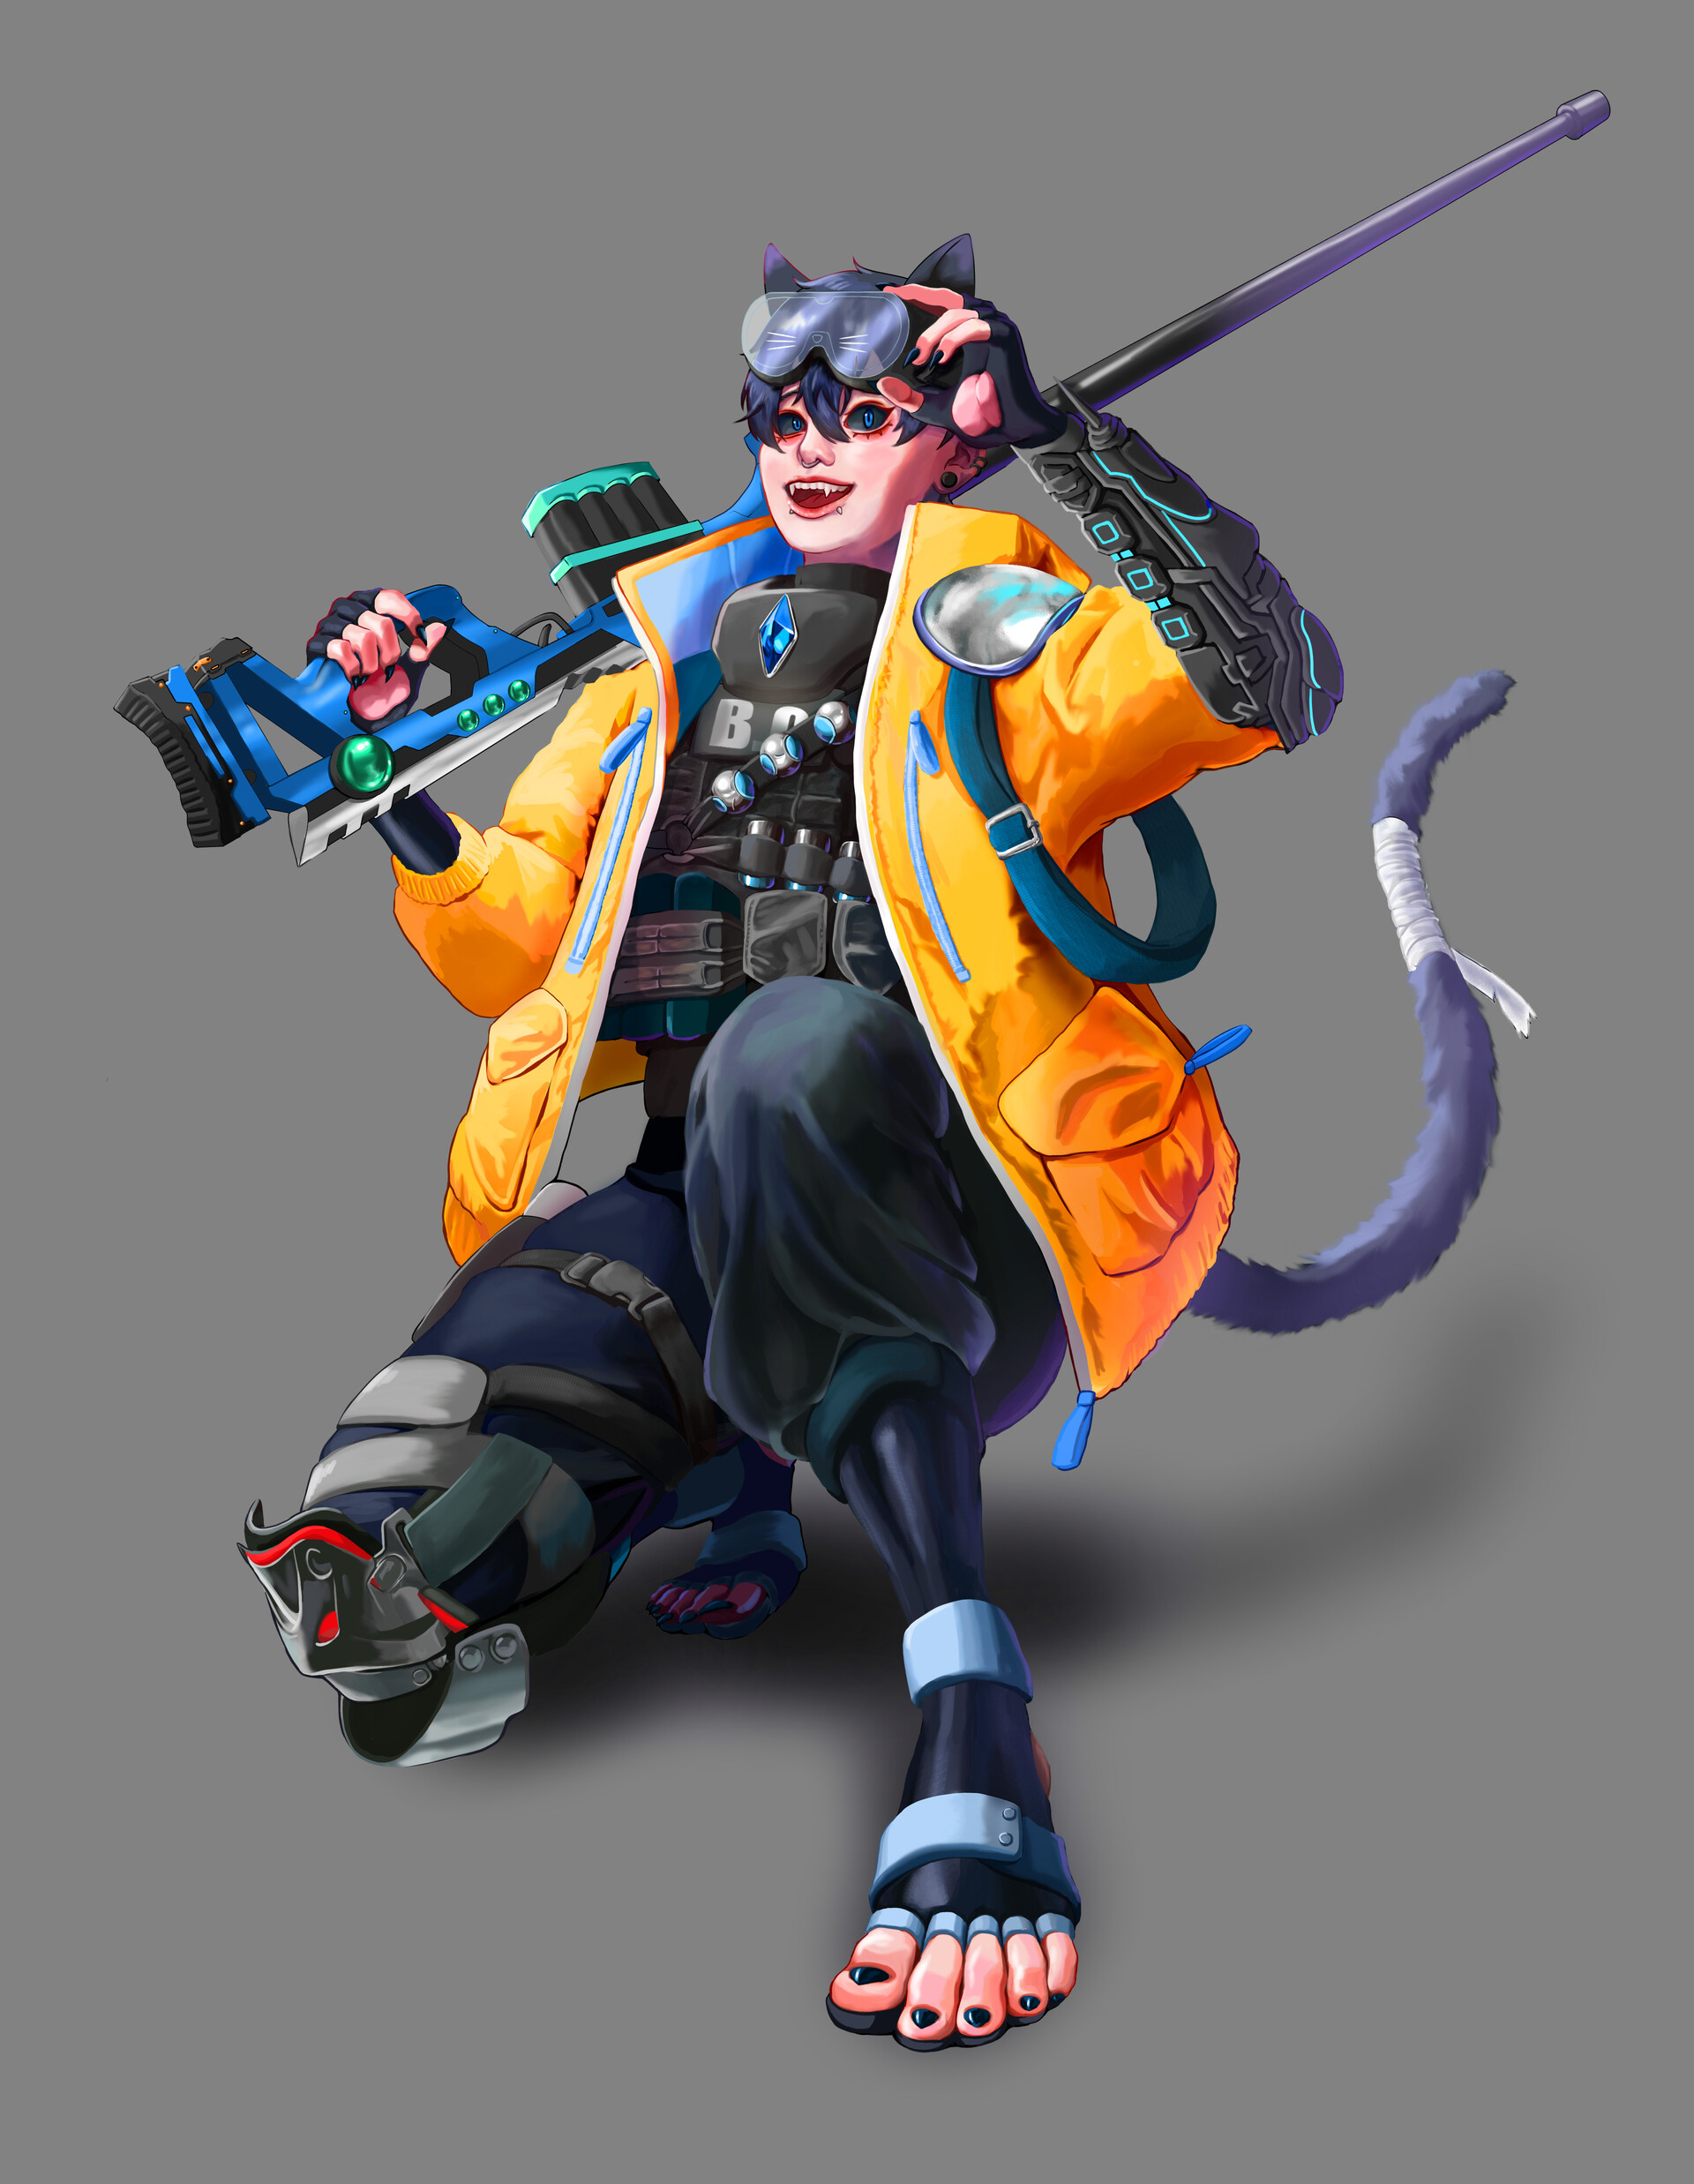 ArtStation - sniper character design